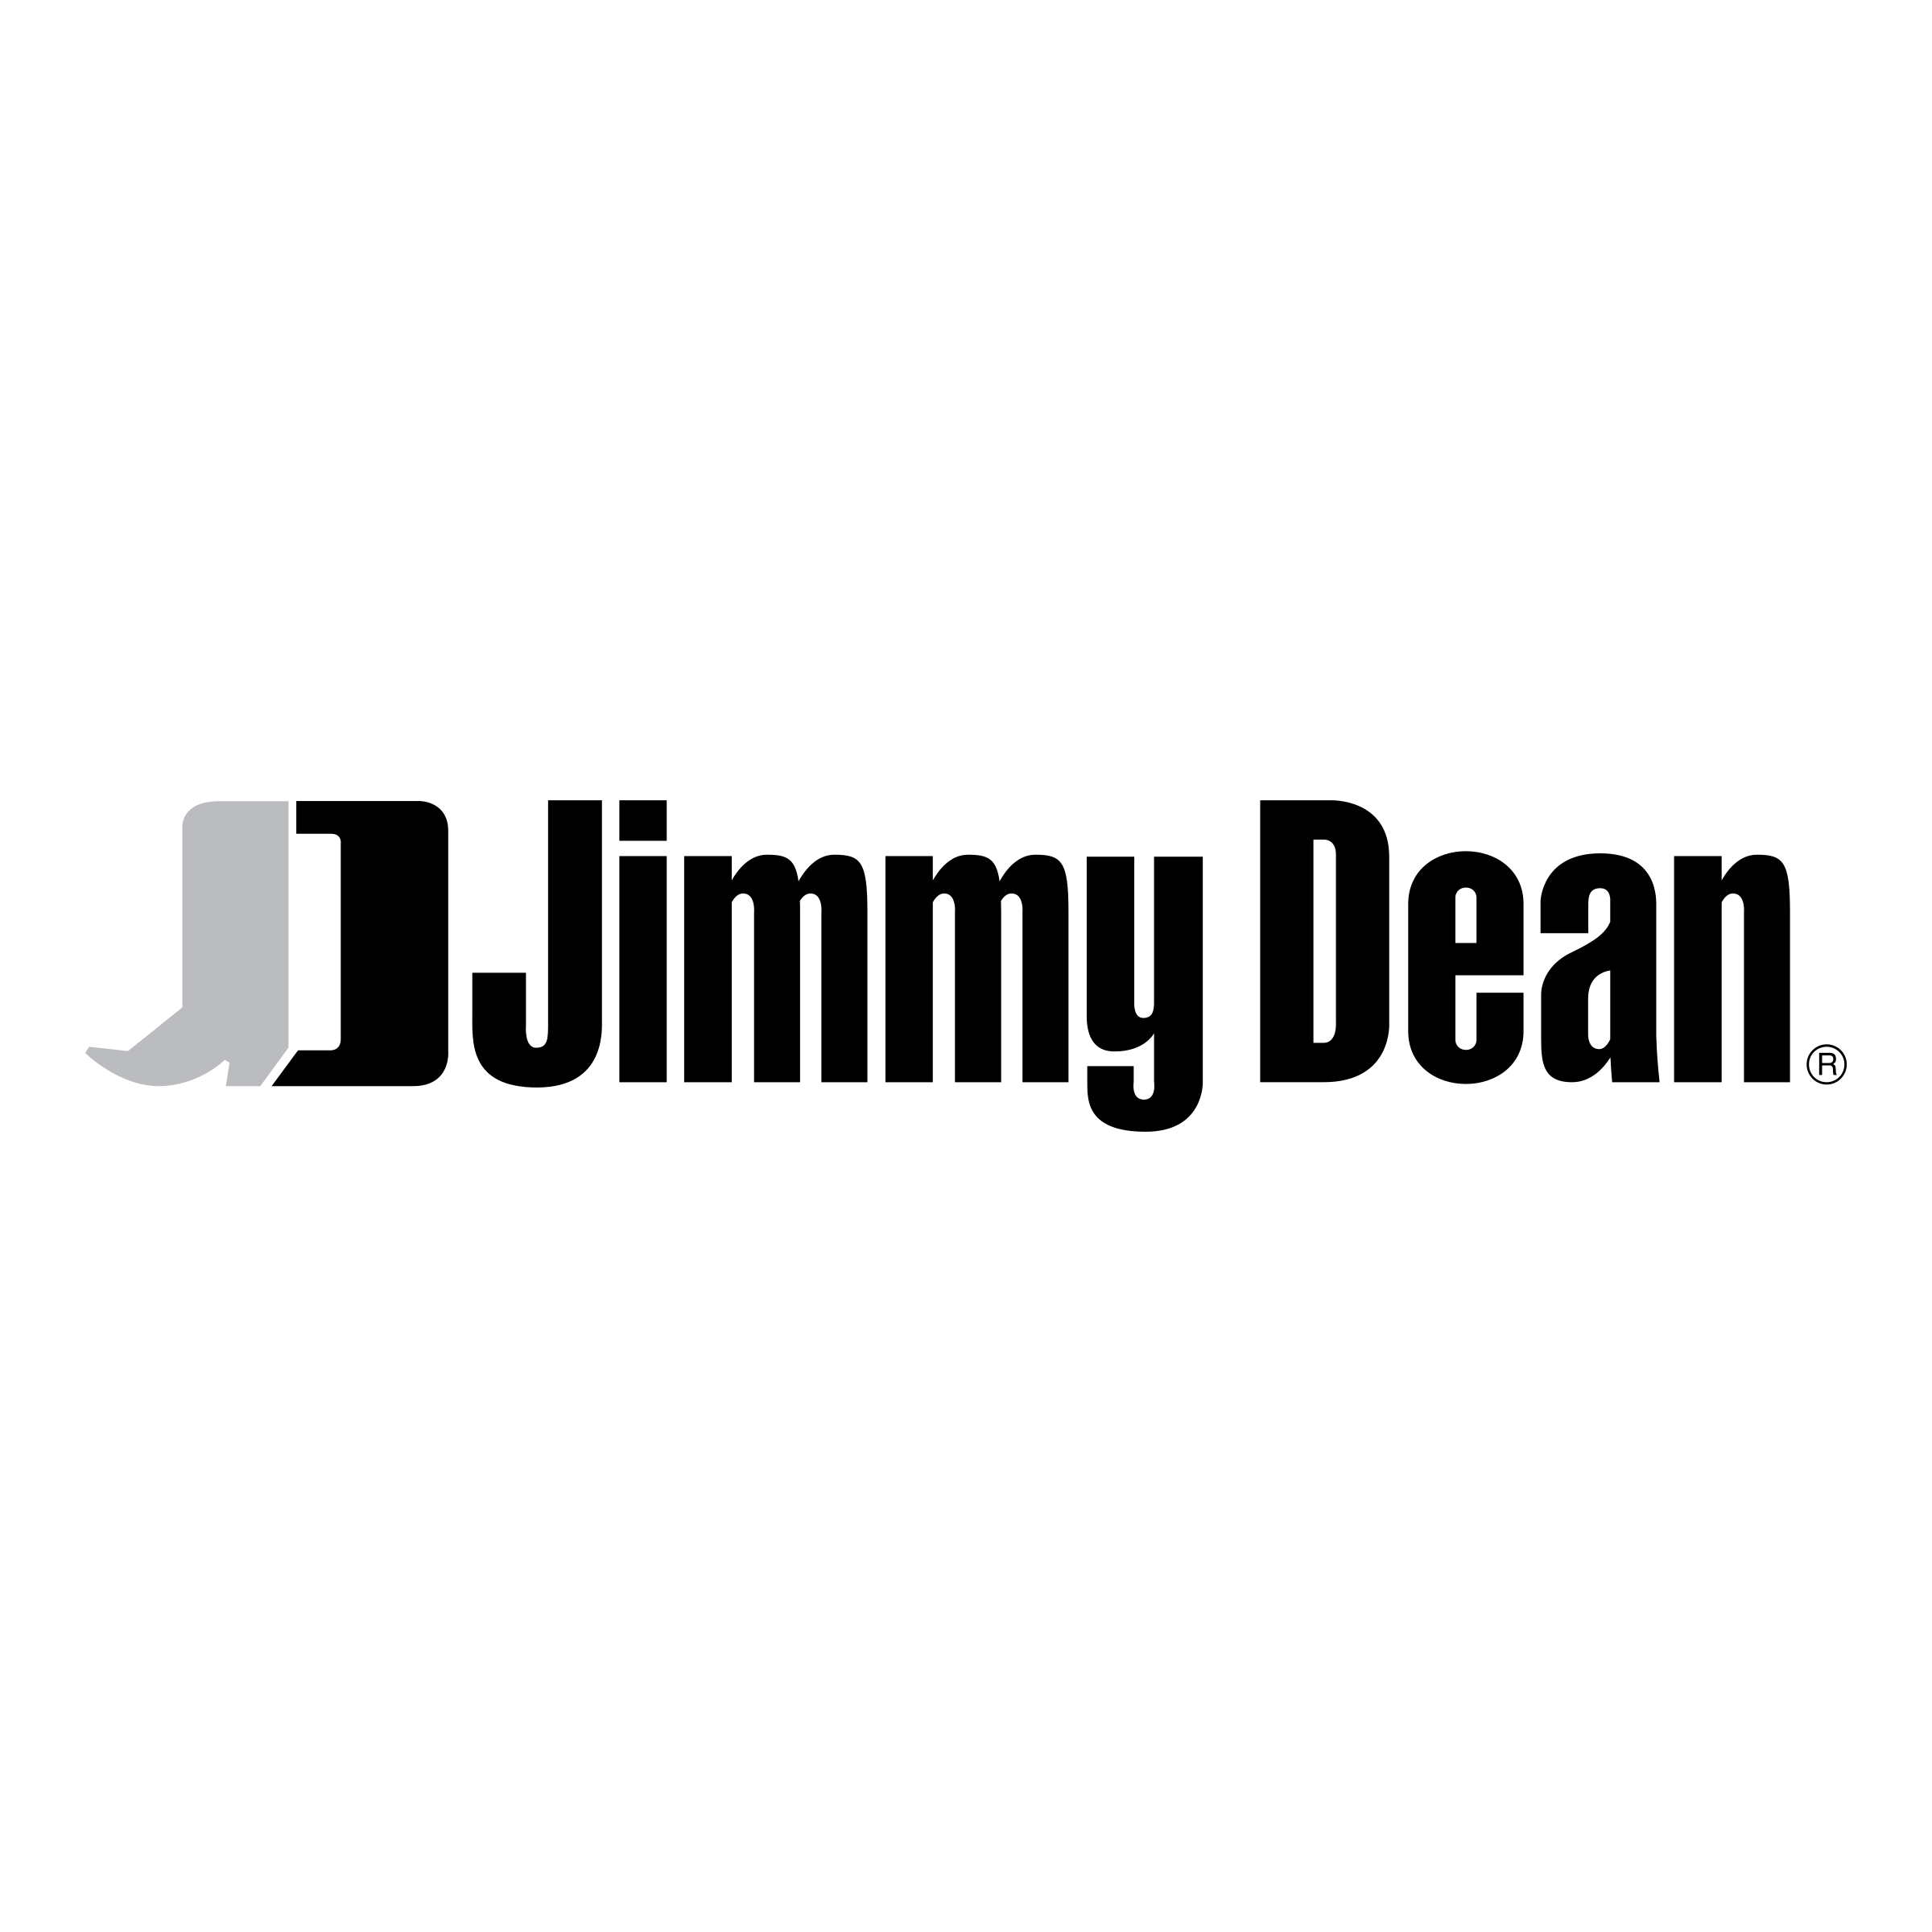 Dean Logo - Jimmy Dean Logo PNG Transparent & SVG Vector - Freebie Supply